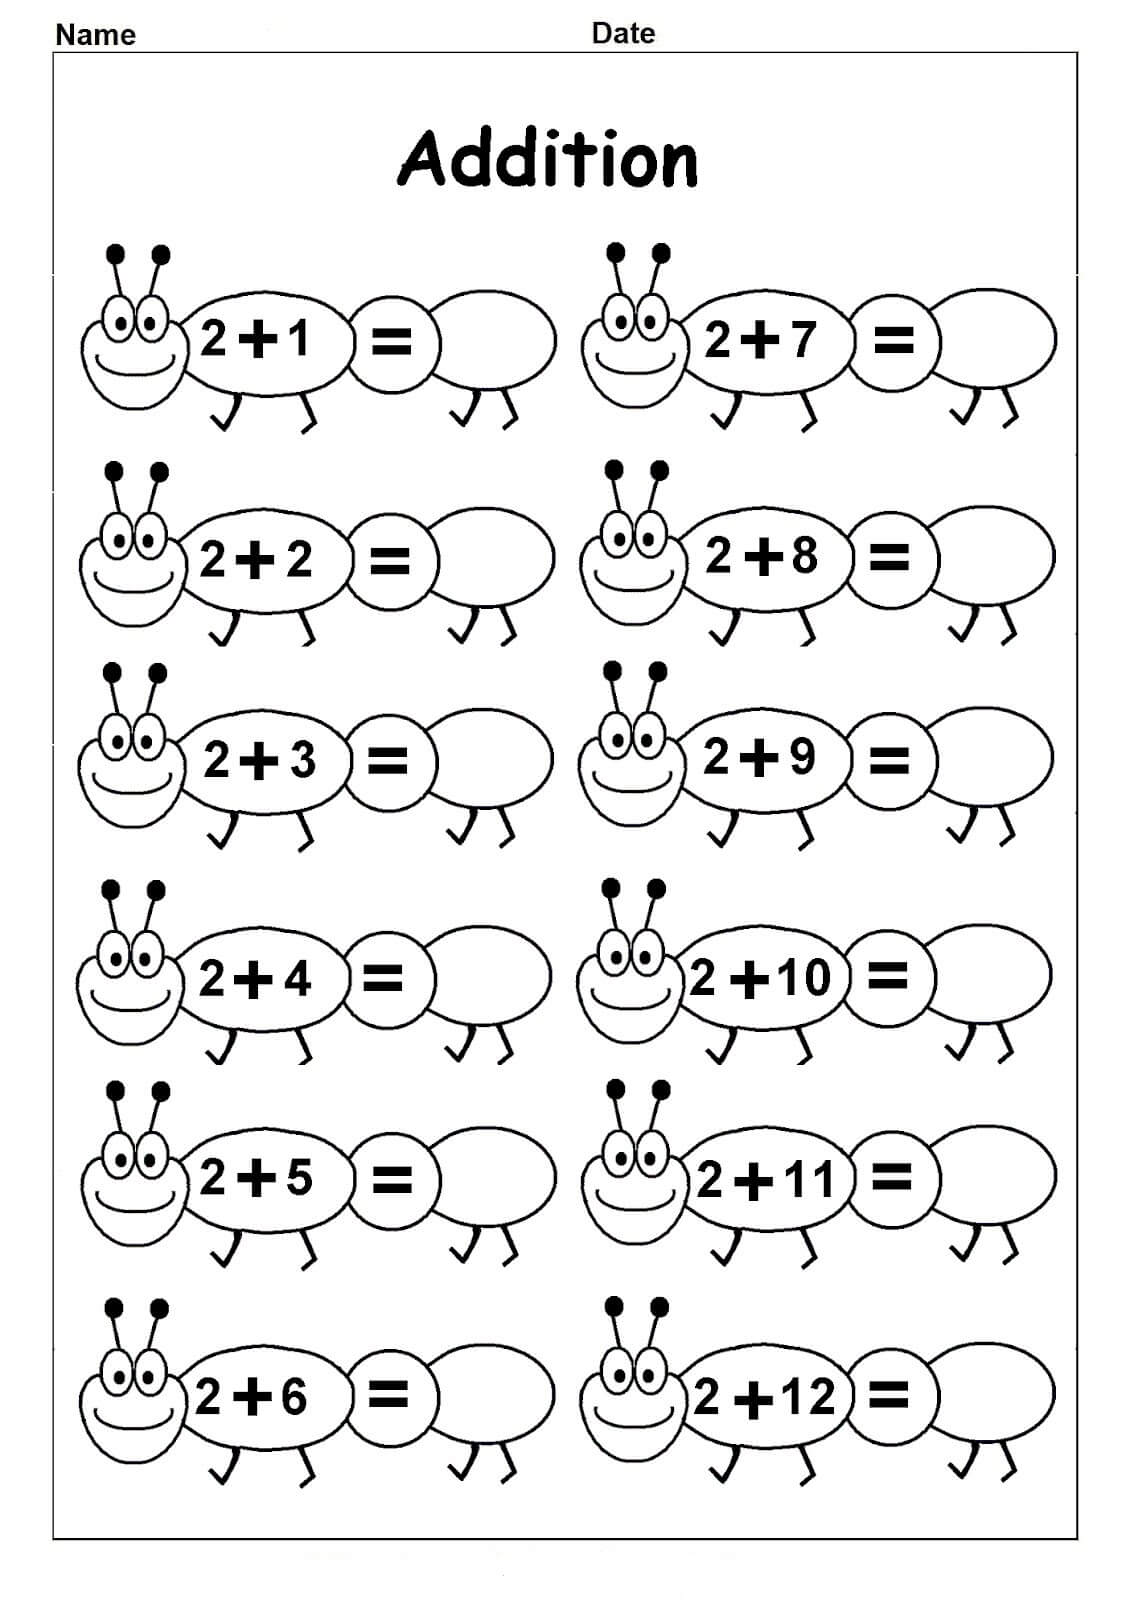 Free Printable Kindergarten Math Worksheets Picture Addition Beginner 